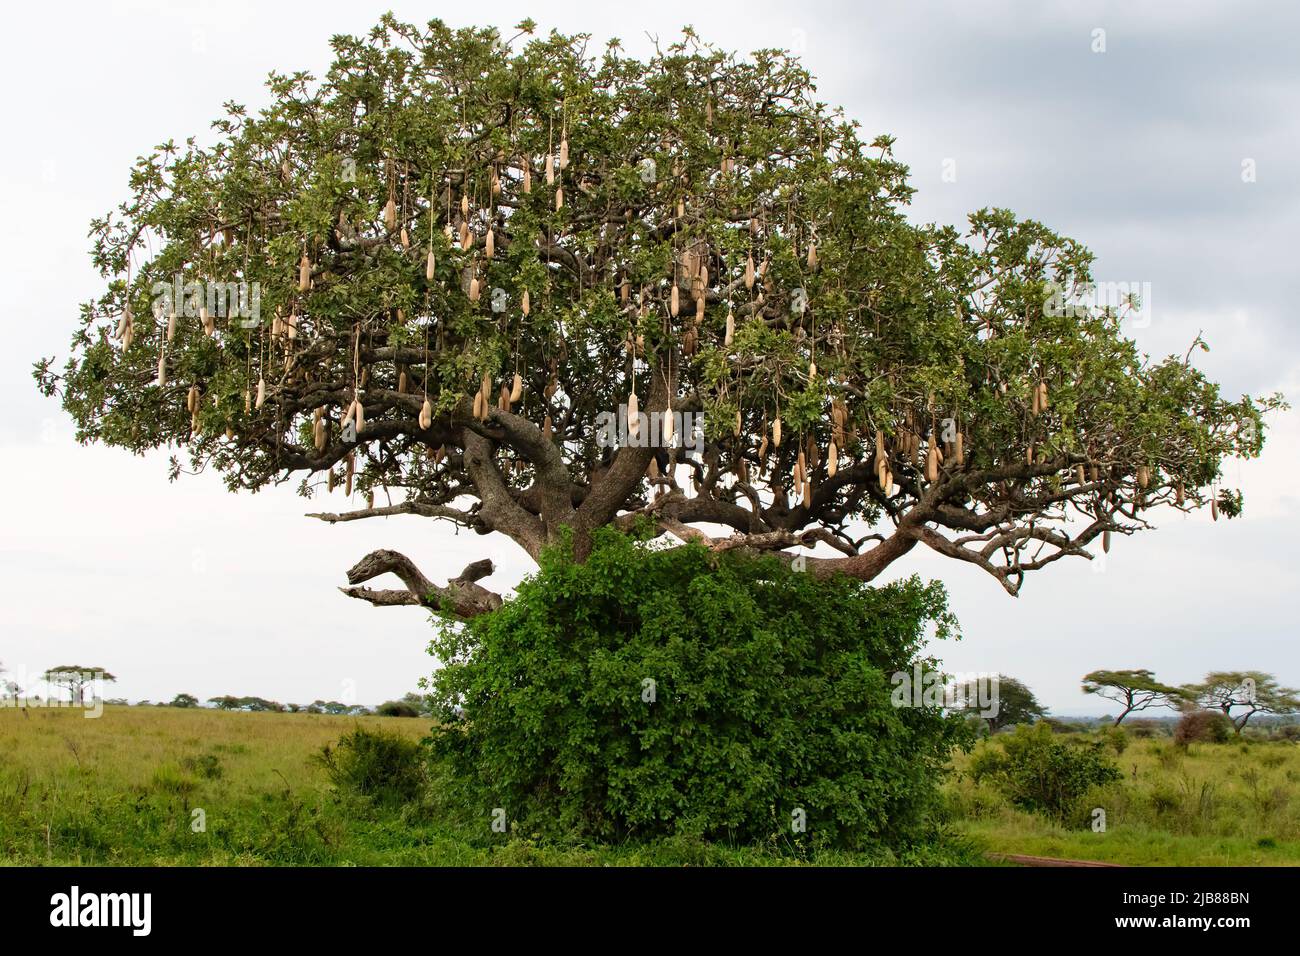 Kigelia Africana - the sausage tree - Kruger2Canyon